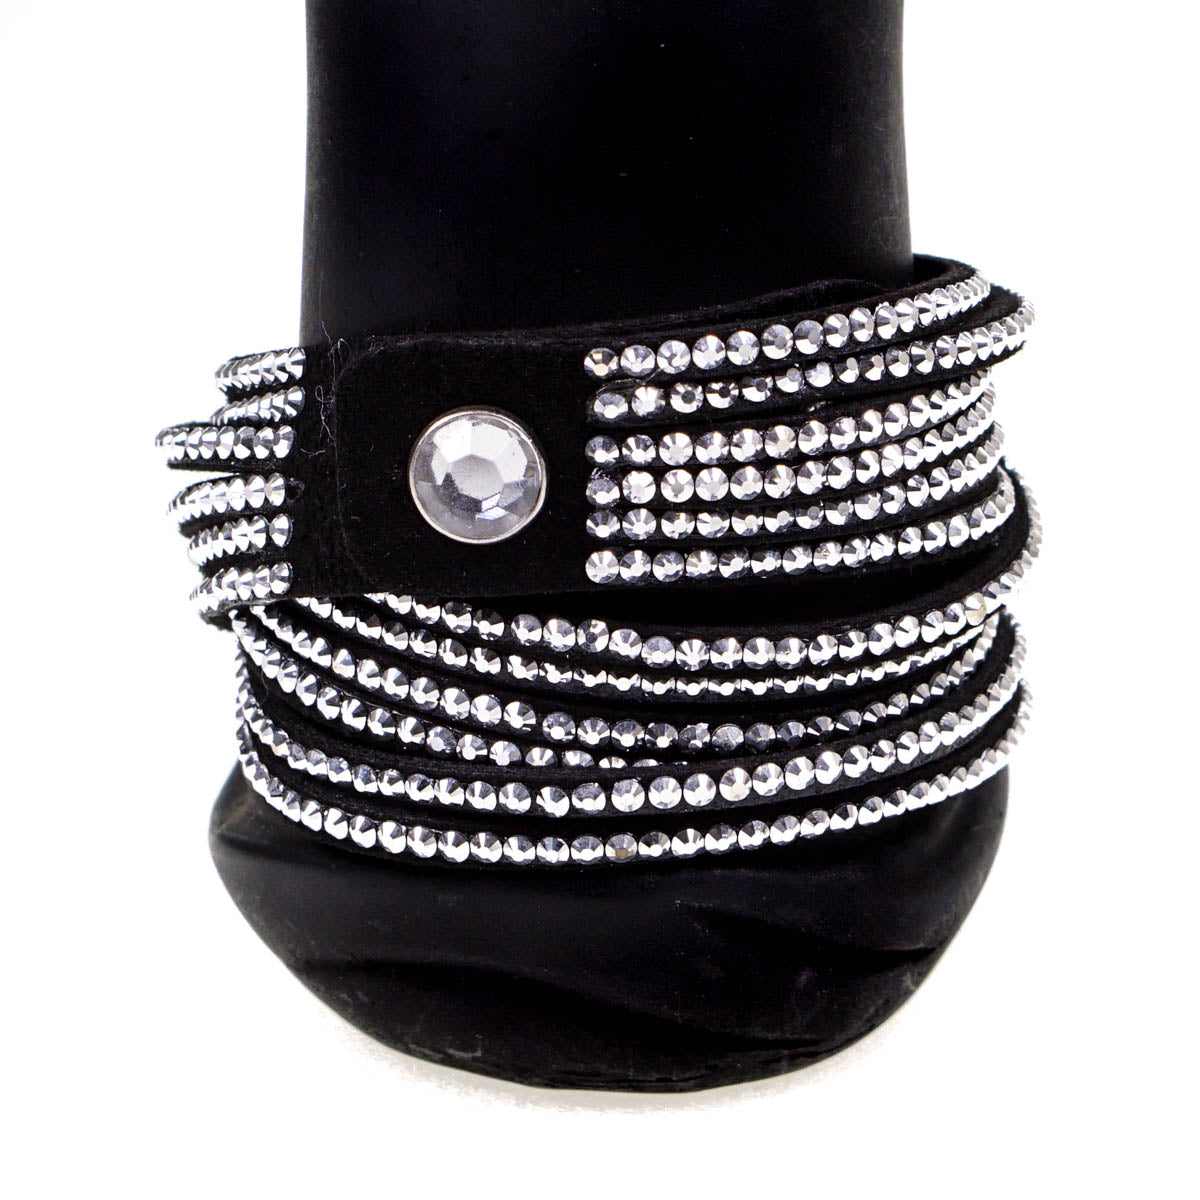 Black Crystal Studded Wrap Bracelet By Aeon